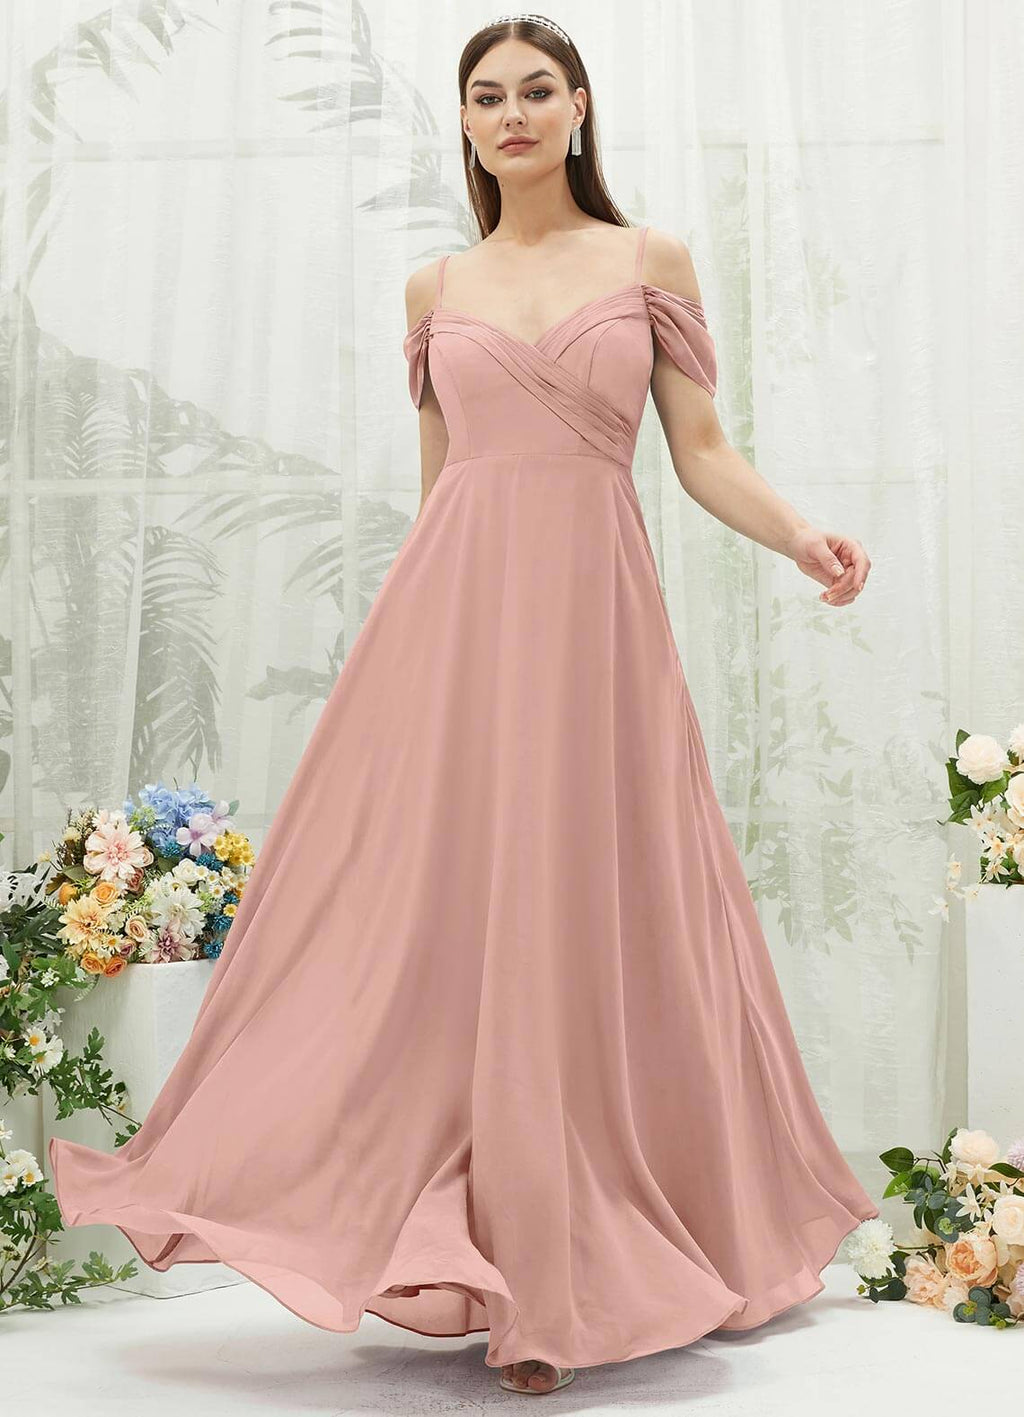 NZ Bridal Dusty Pink Chiffon Sweetheart bridesmaid dresses with Pocket BG30217 Spence a